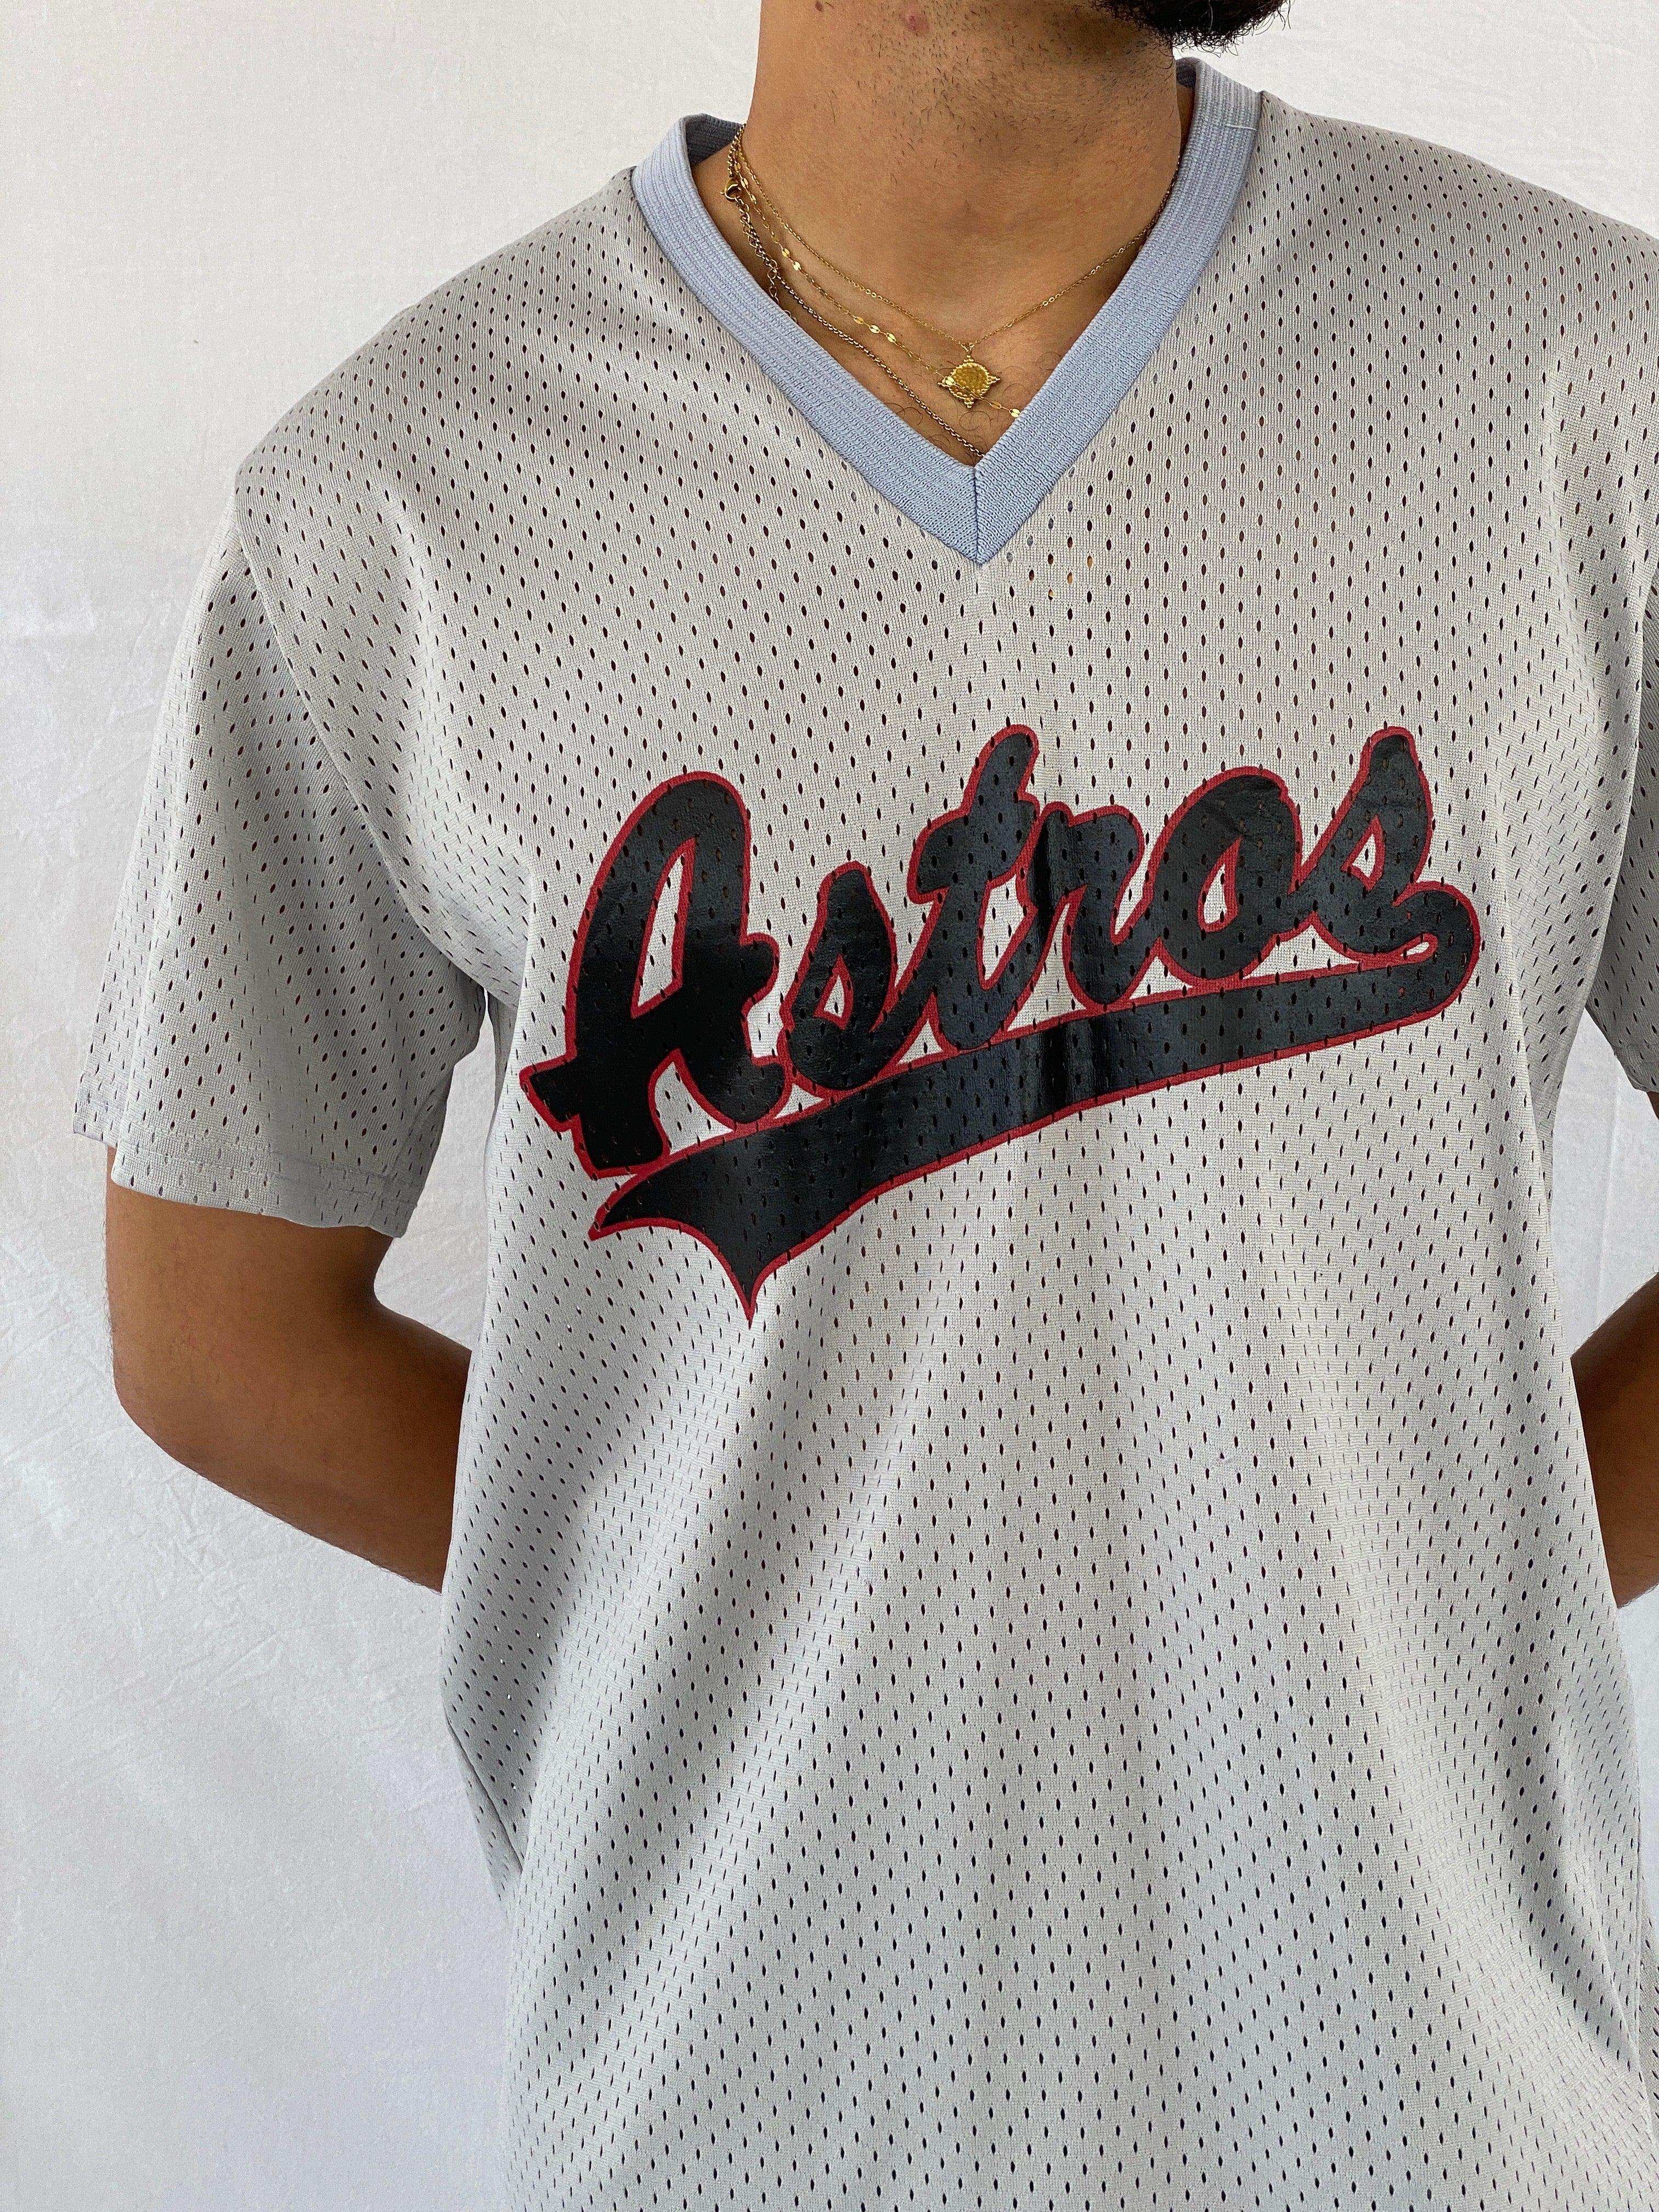 Astros 27 Mesh Jersey - Balagan Vintage Half Sleeve Top Abdullah, NEW IN